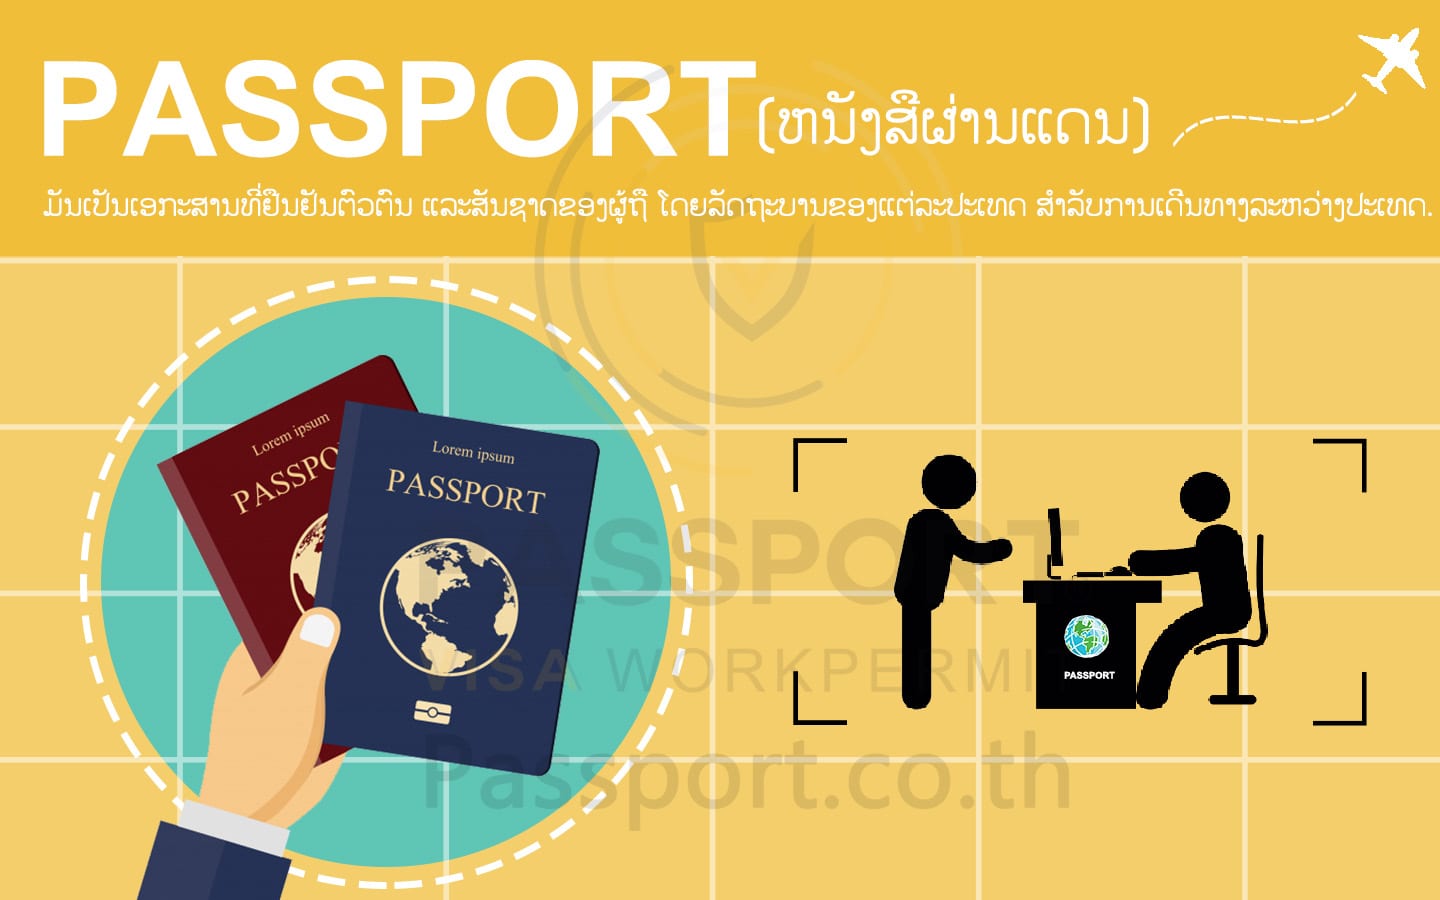 PASSPORT (หนังสือเดินทาง)